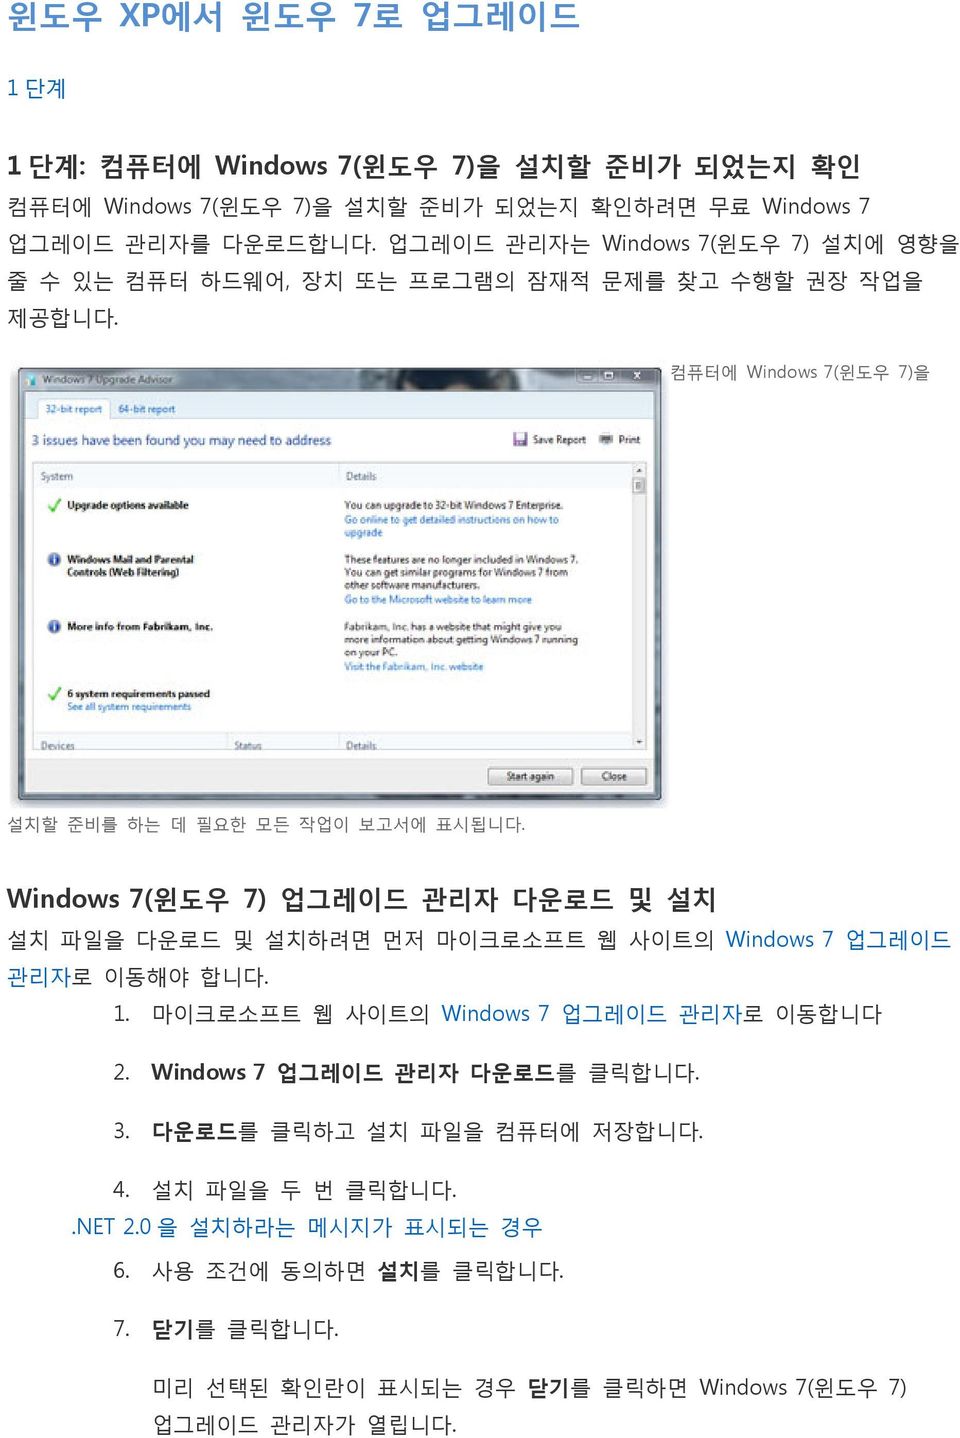 Windows 7(윈도우 7) 업그레이드 관리자 다운로드 및 설치 설치 파일을 다운로드 및 설치하려면 먼저 마이크로소프트 웹 사이트의 Windows 7 업그레이드 관리자로 이동해야 합니다. 1. 마이크로소프트 웹 사이트의 Windows 7 업그레이드 관리자로 이동합니다 2.